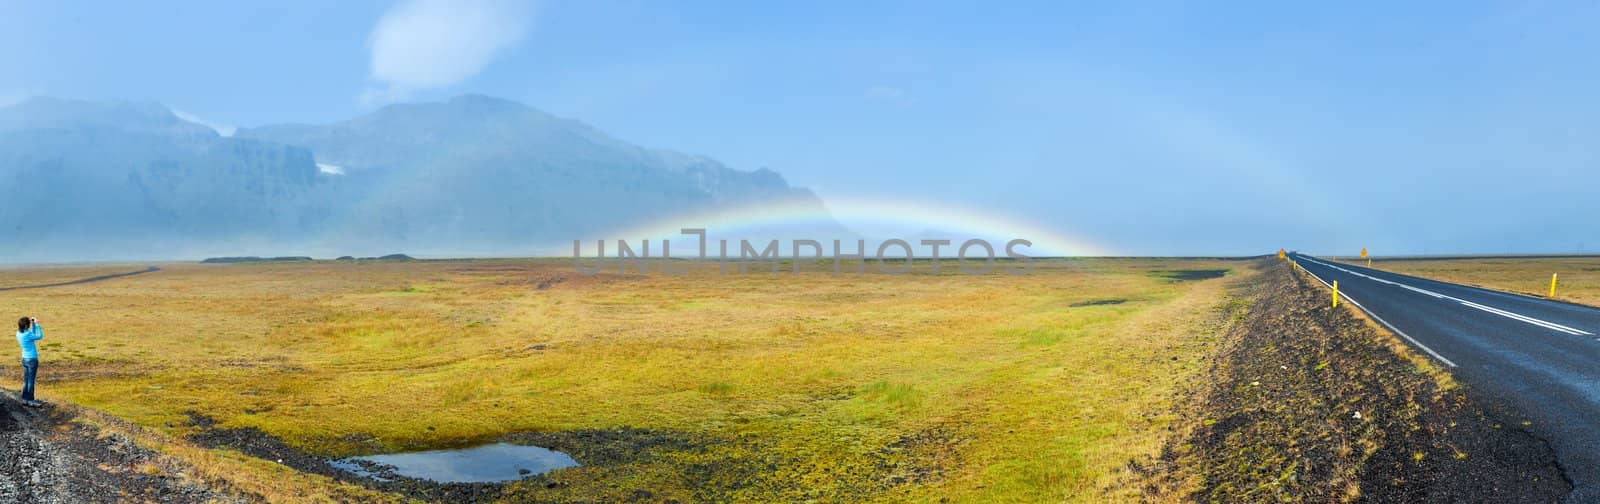 Rainbow over asphalt highway. Panorama. Iceland - famous Ring Road (Hringvegur).